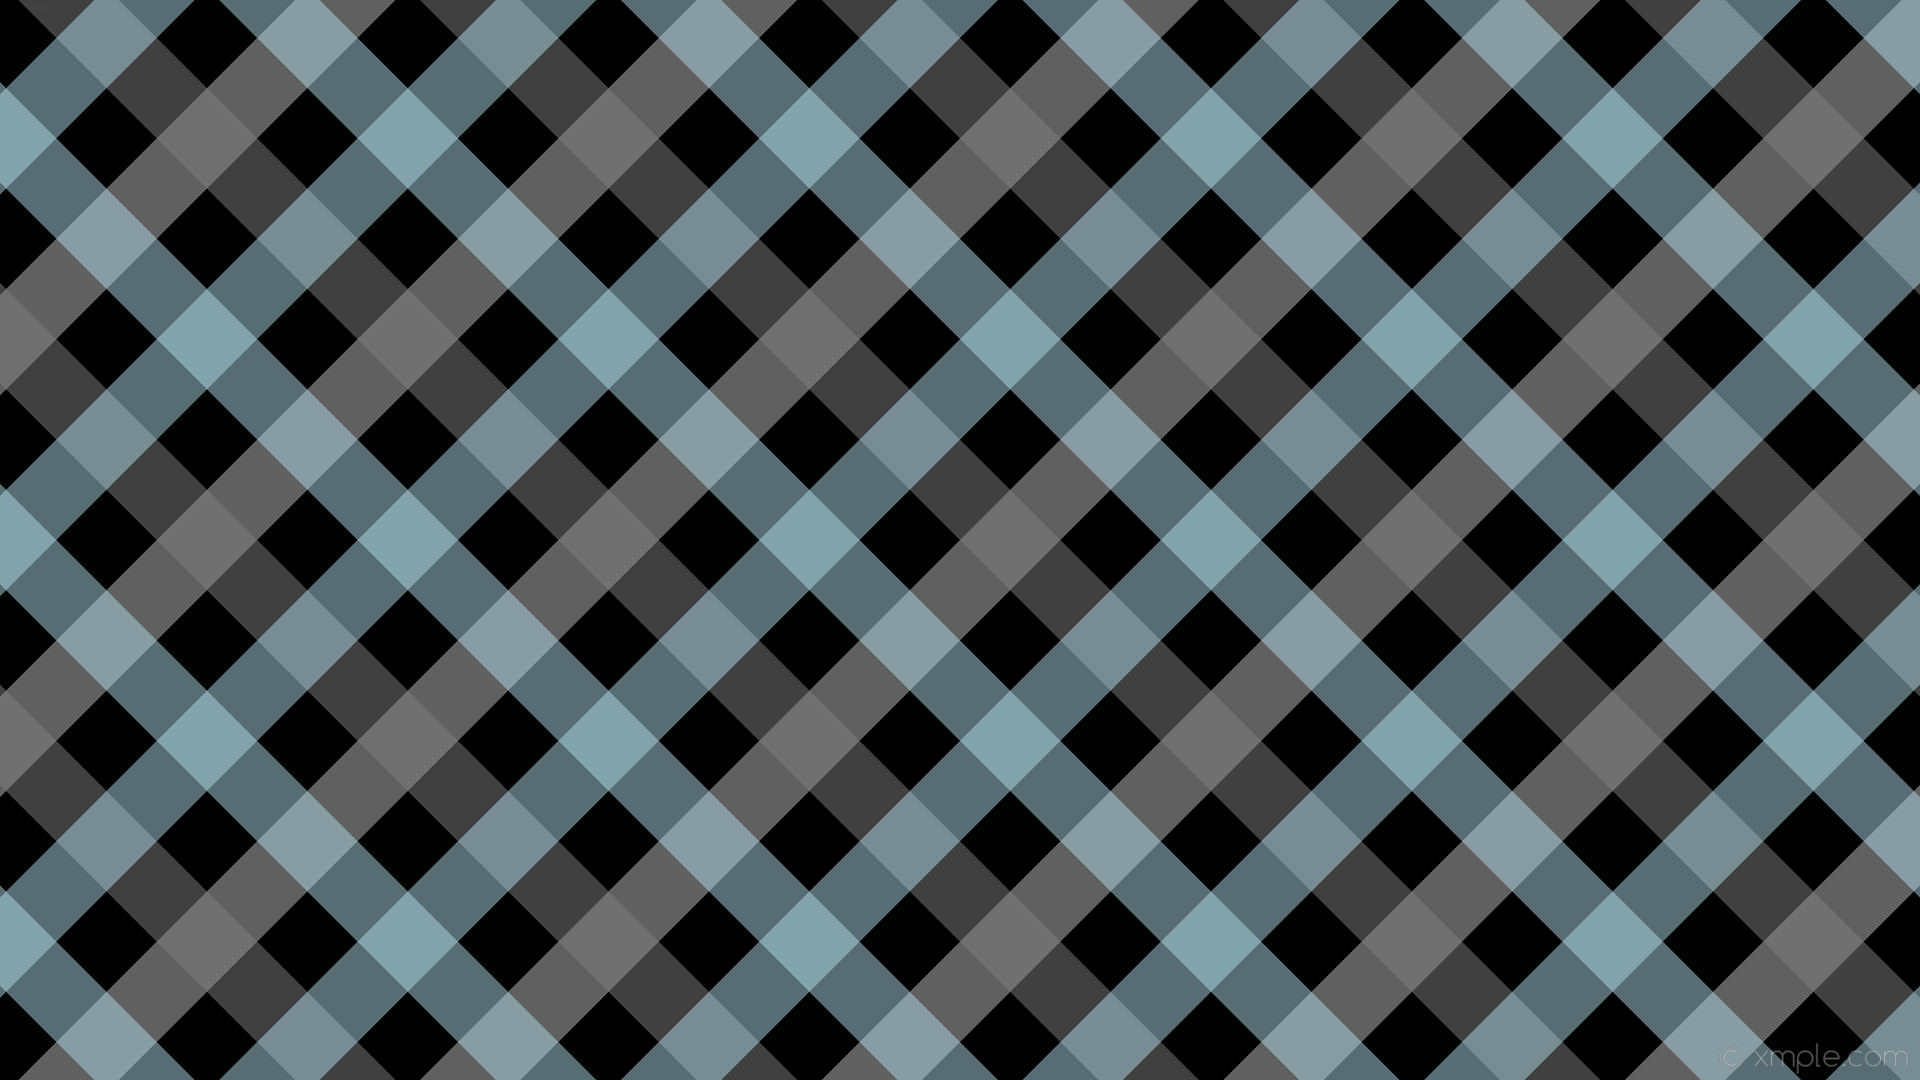 1920x1080 wallpaper grey quad gingham blue black striped silver gray light blue  #000000 #c0c0c0 #